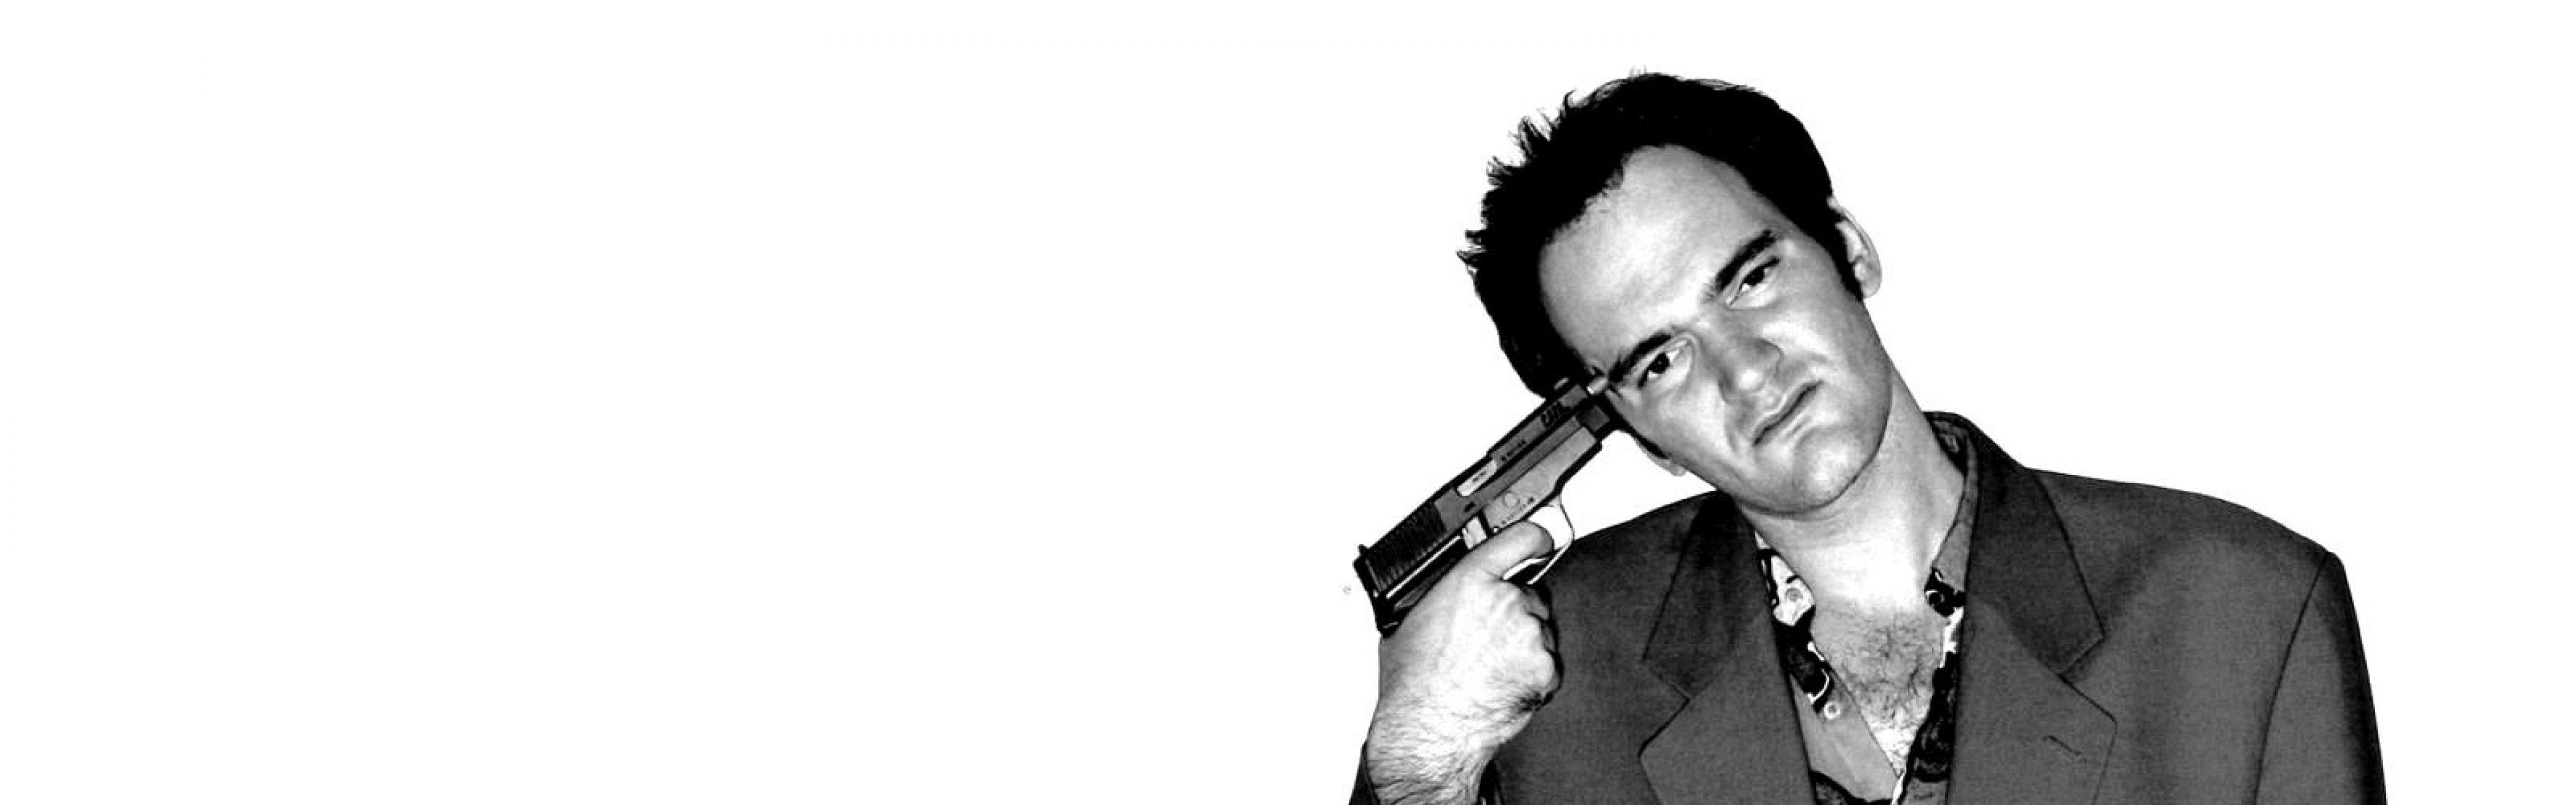 Tarantino Wallpaper